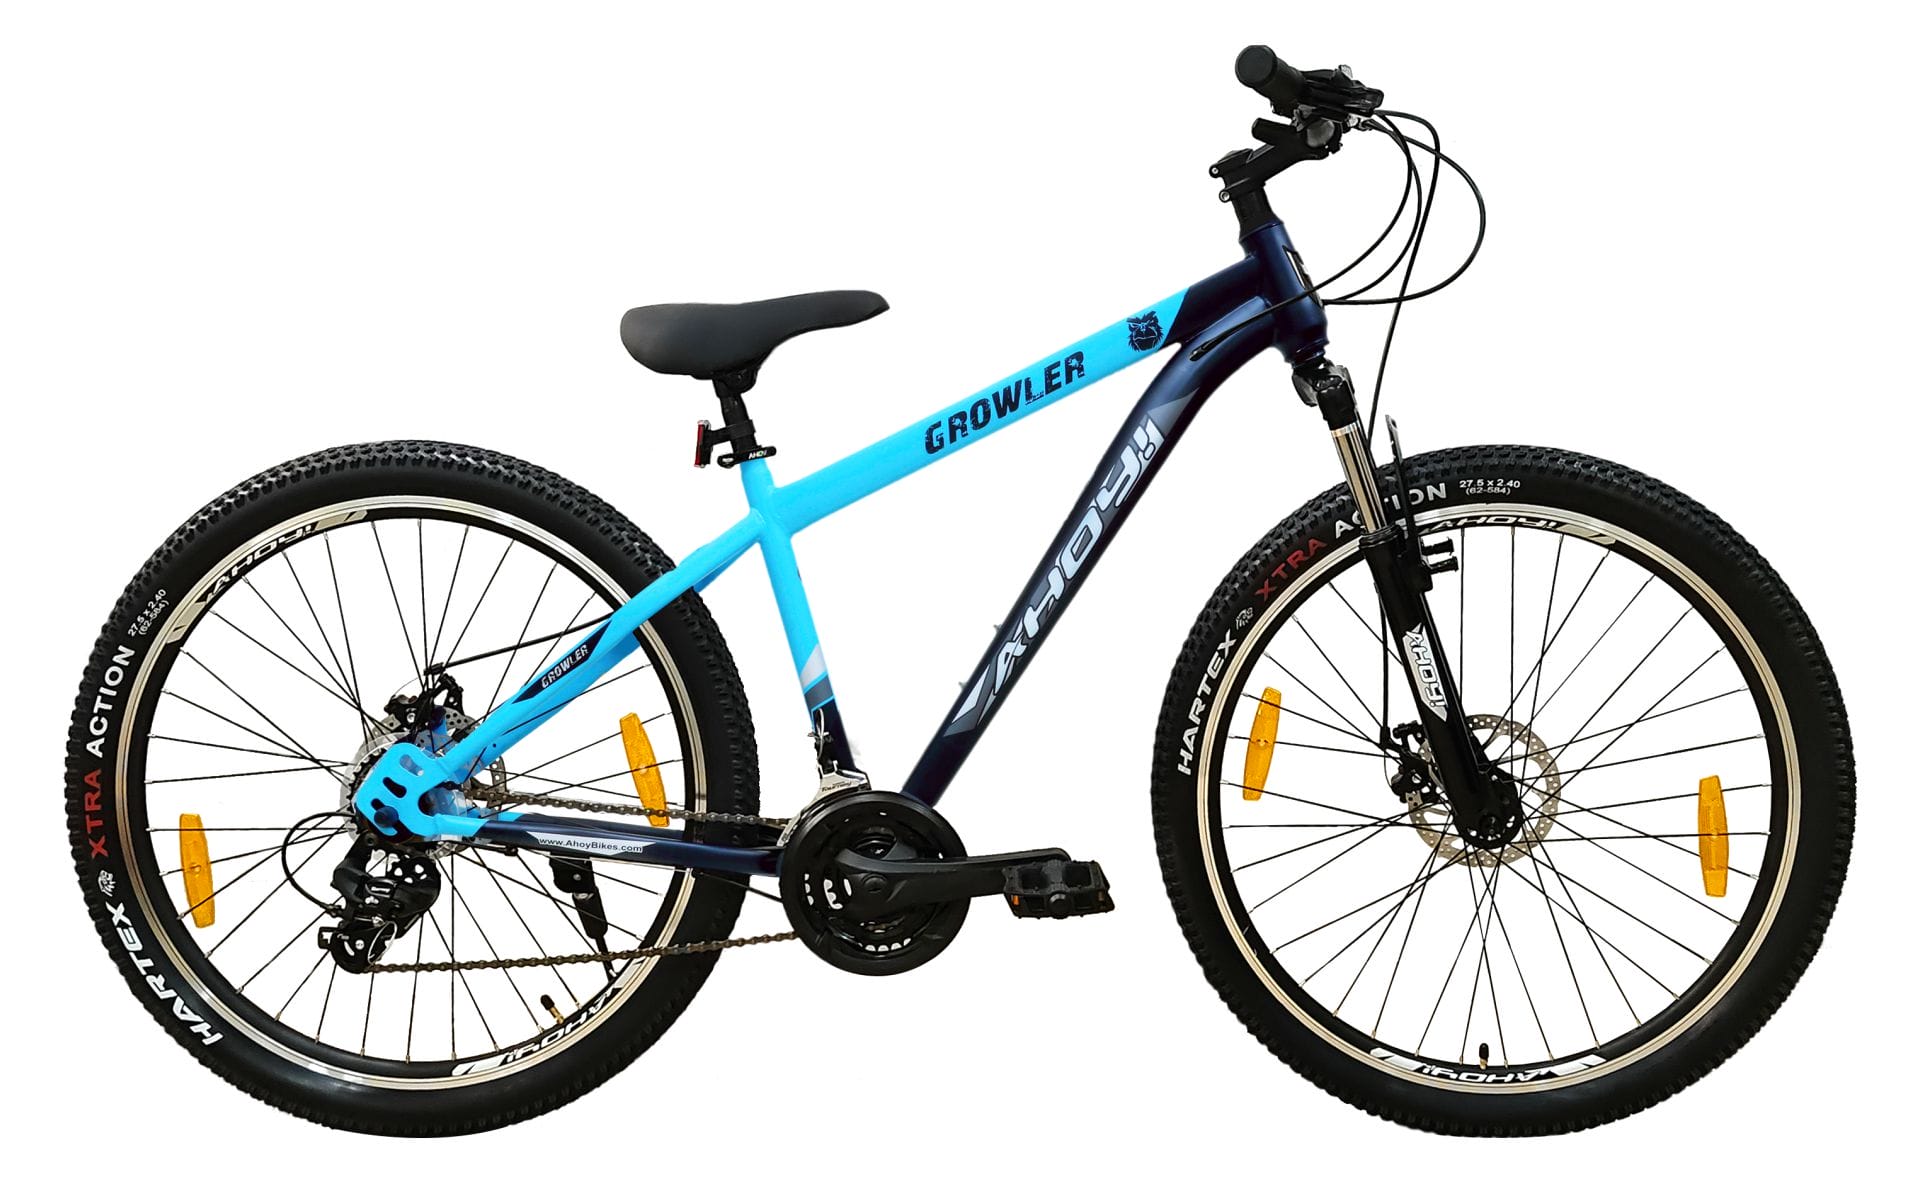 Growler MS Gear Bicycle 27.5T MTB Bike with Shimano gear Blue